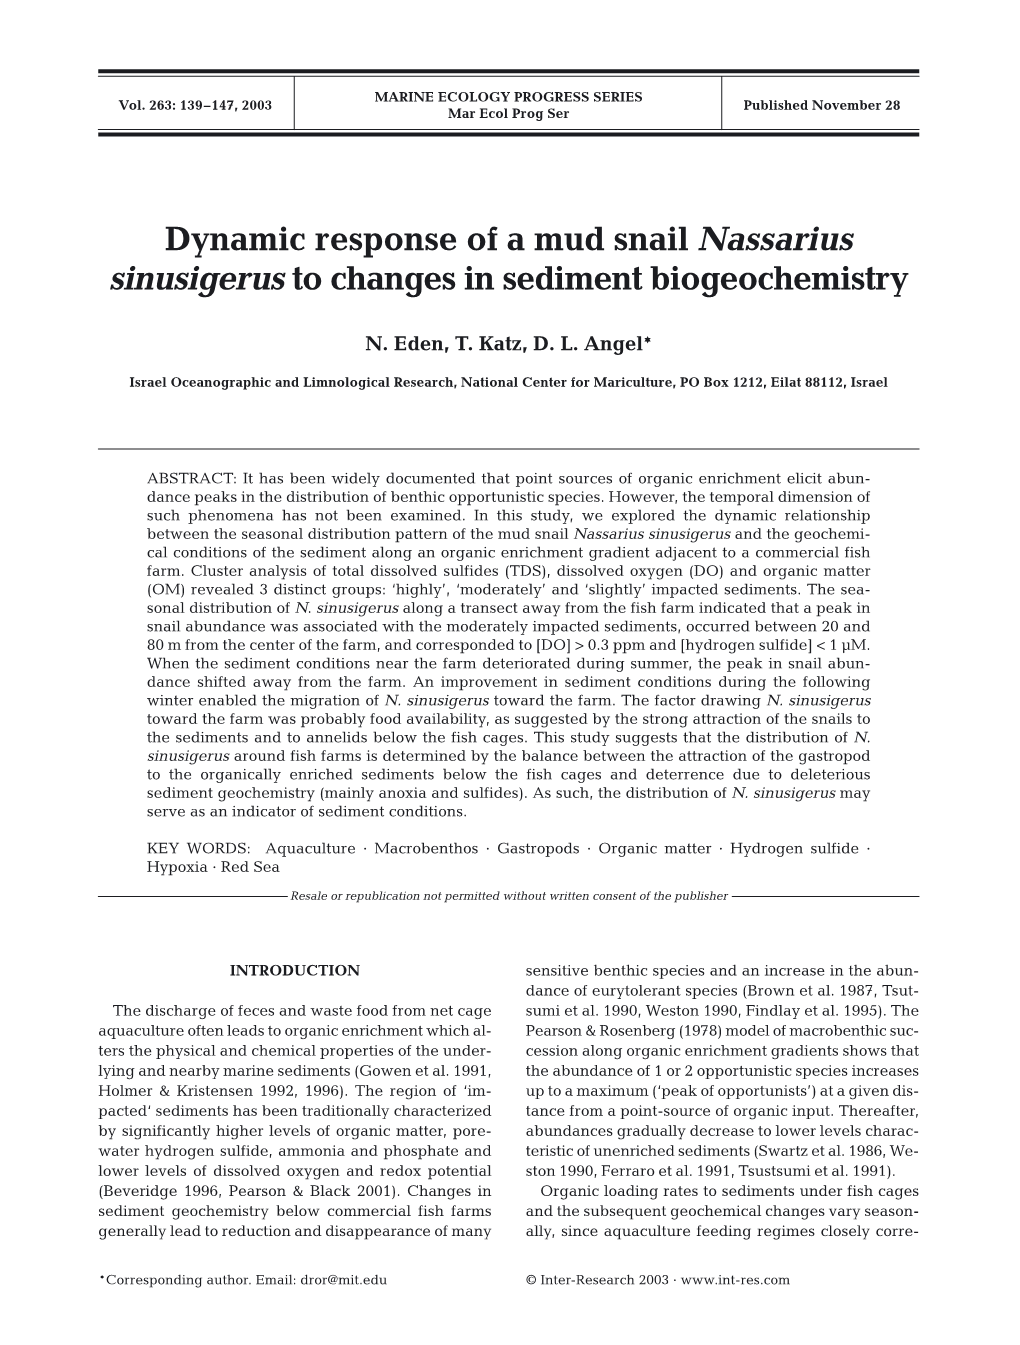 Dynamic Response of a Mud Snail Nassarius Sinusigerus to Changes in Sediment Biogeochemistry